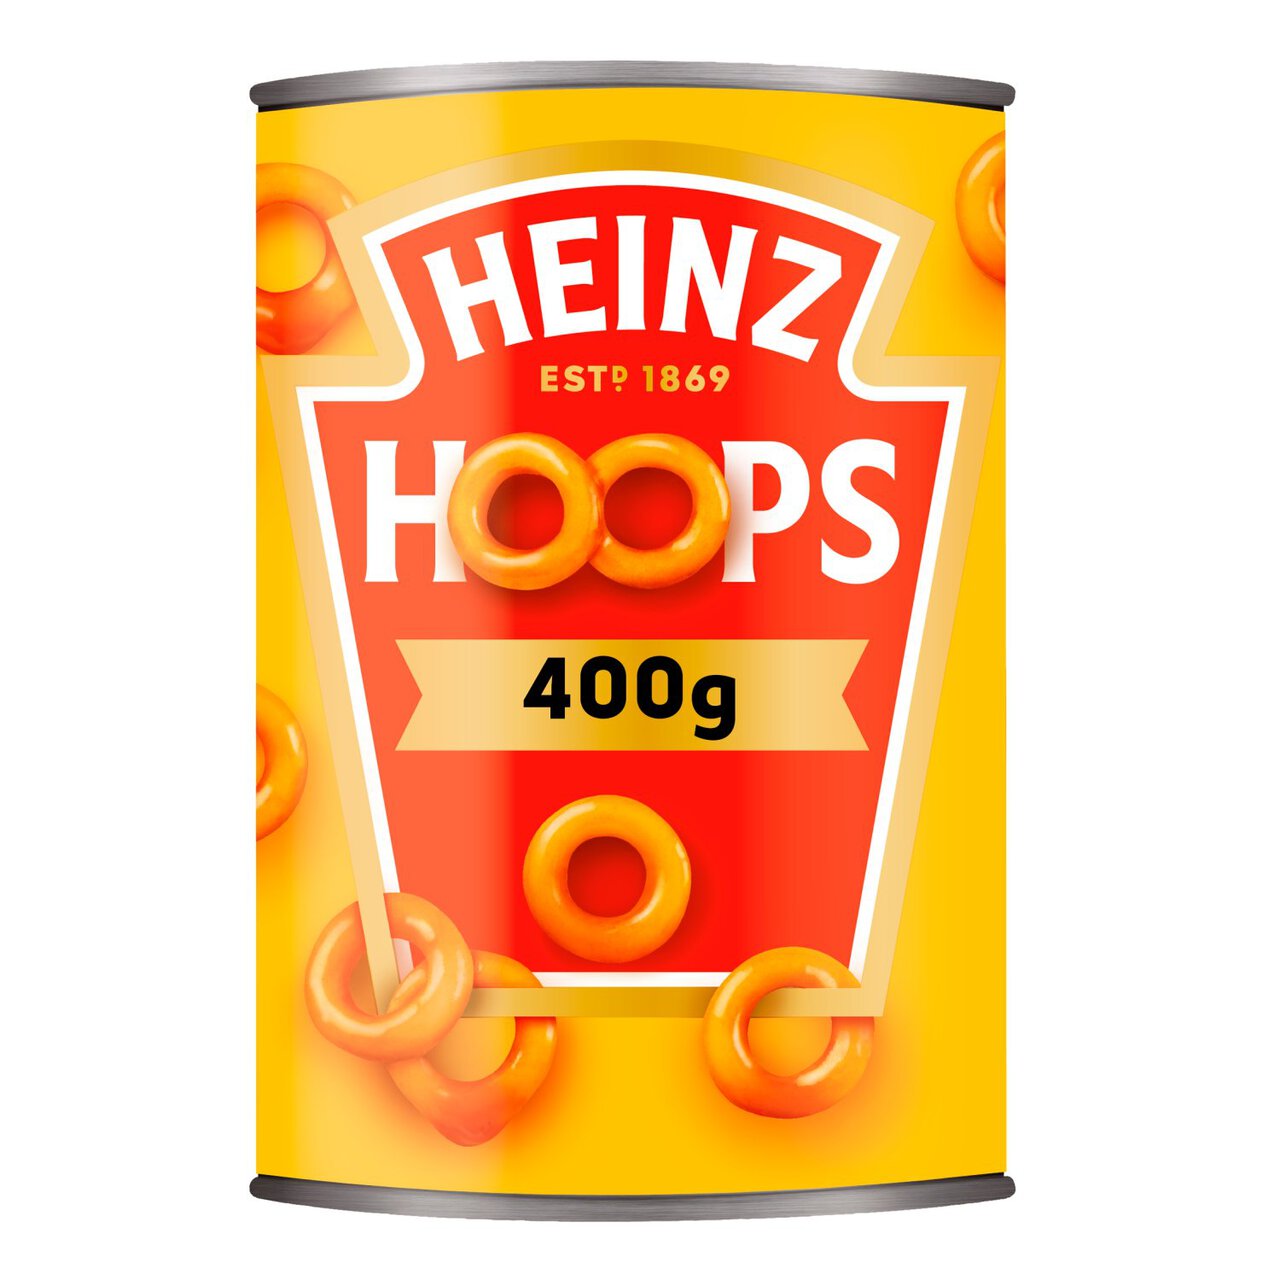 Heinz Spaghetti Hoops in Tomato Sauce 400g